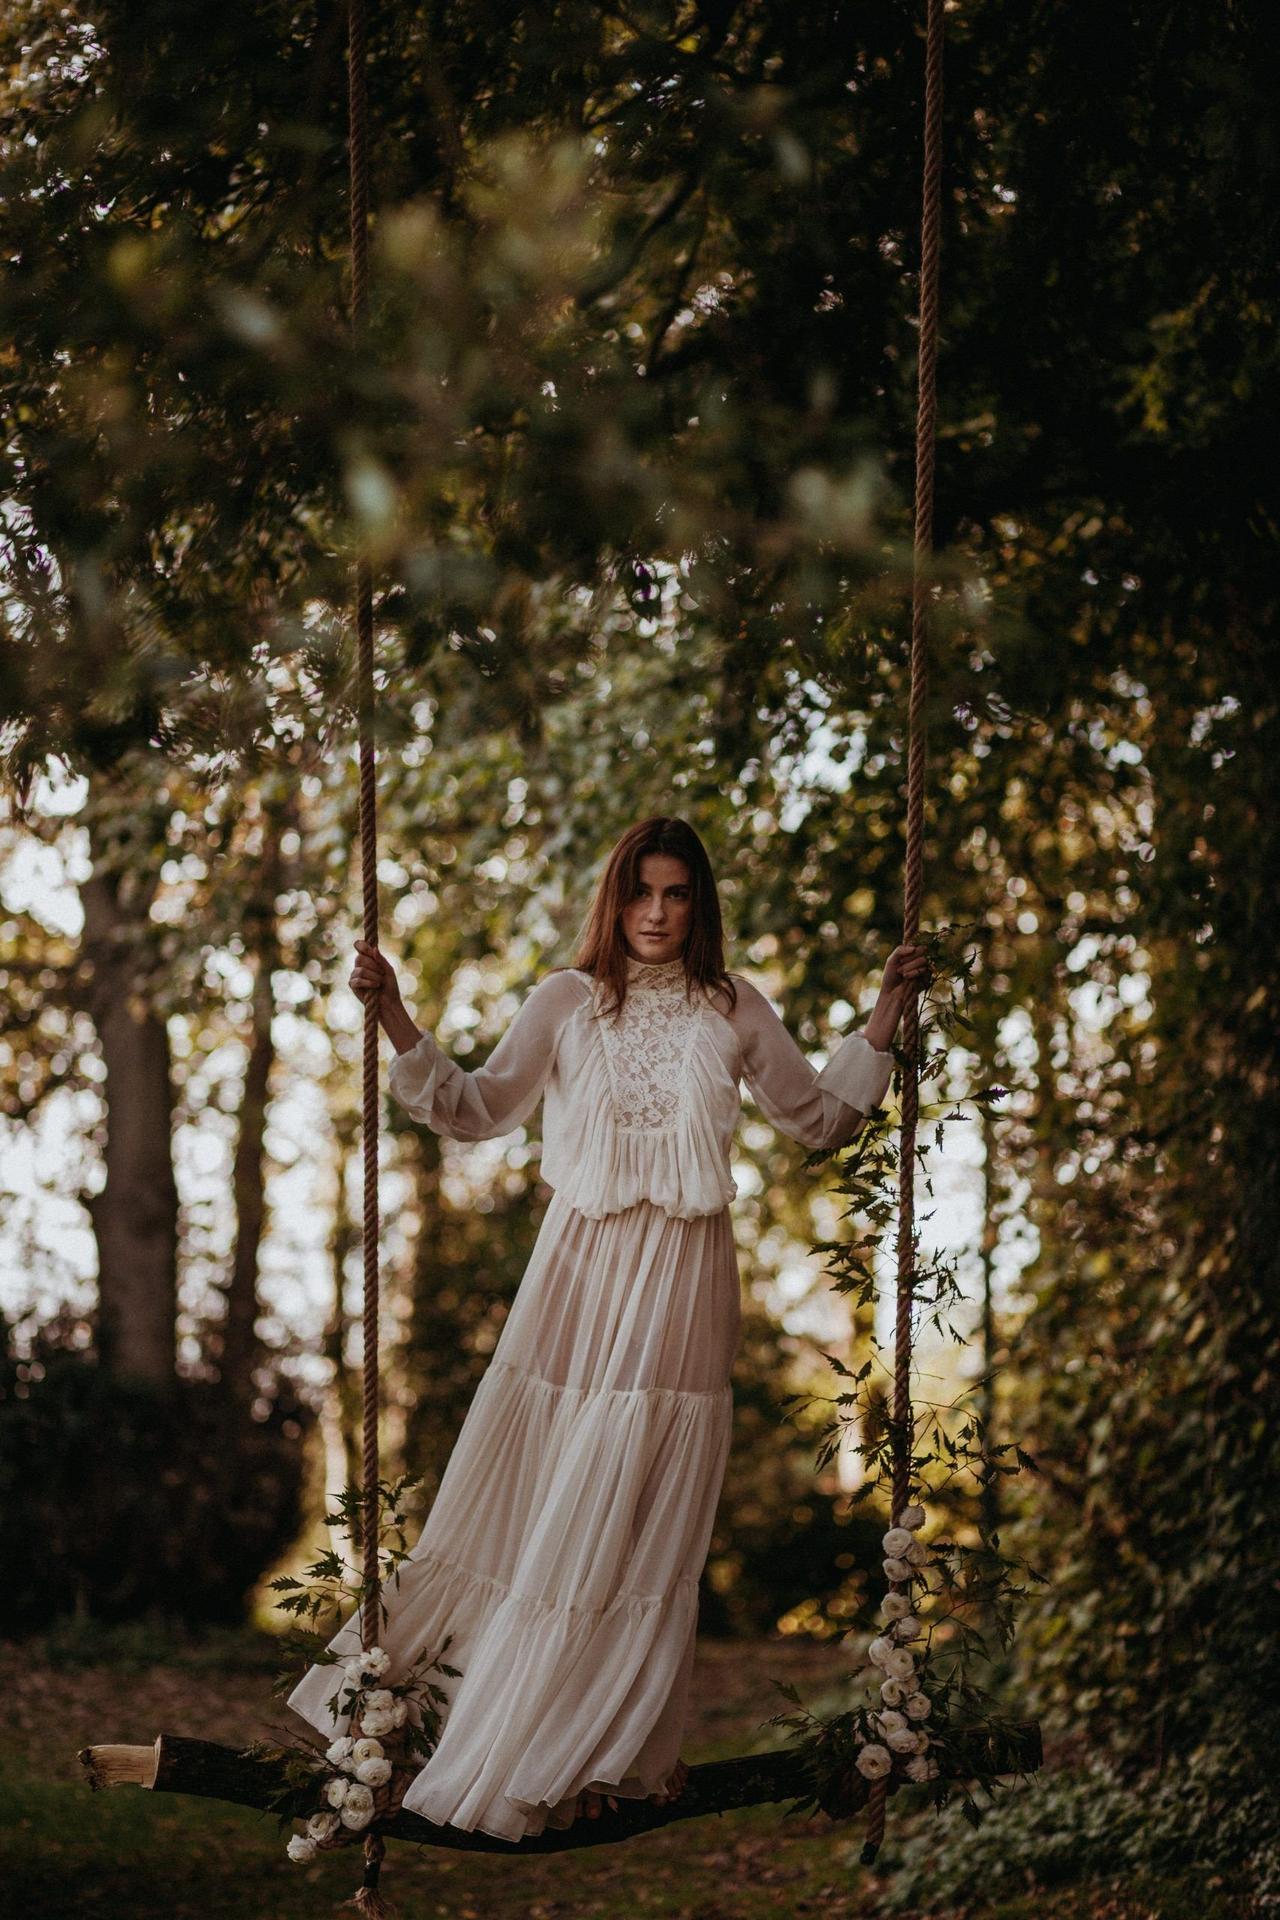 Model wearing a vintage style long sleeved wedding dress